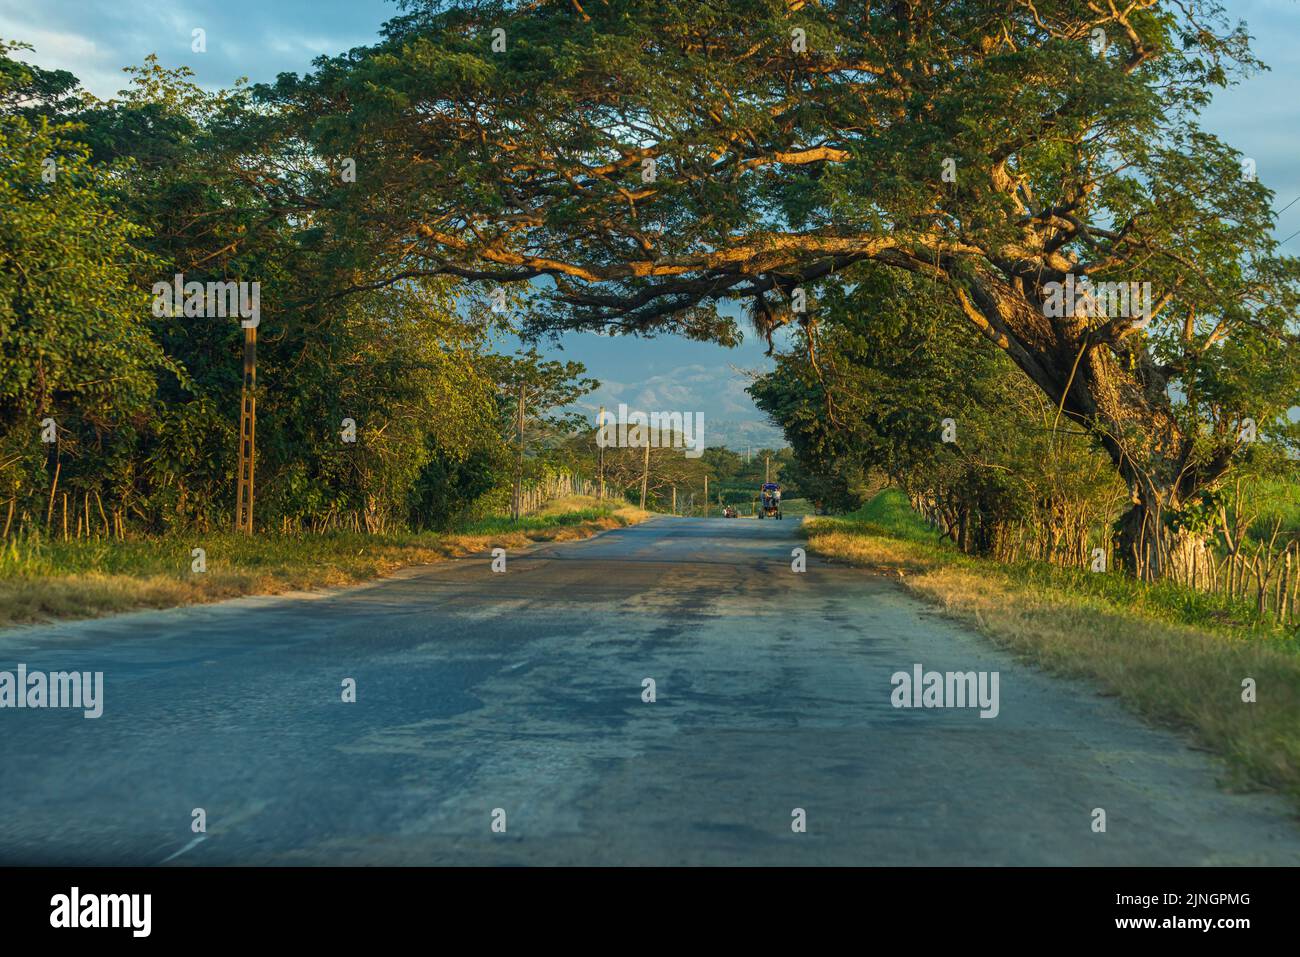 TRINIDAD, CUBA - JANUARY 8, 2021: Asphalt road in the center of Cuba Stock Photo